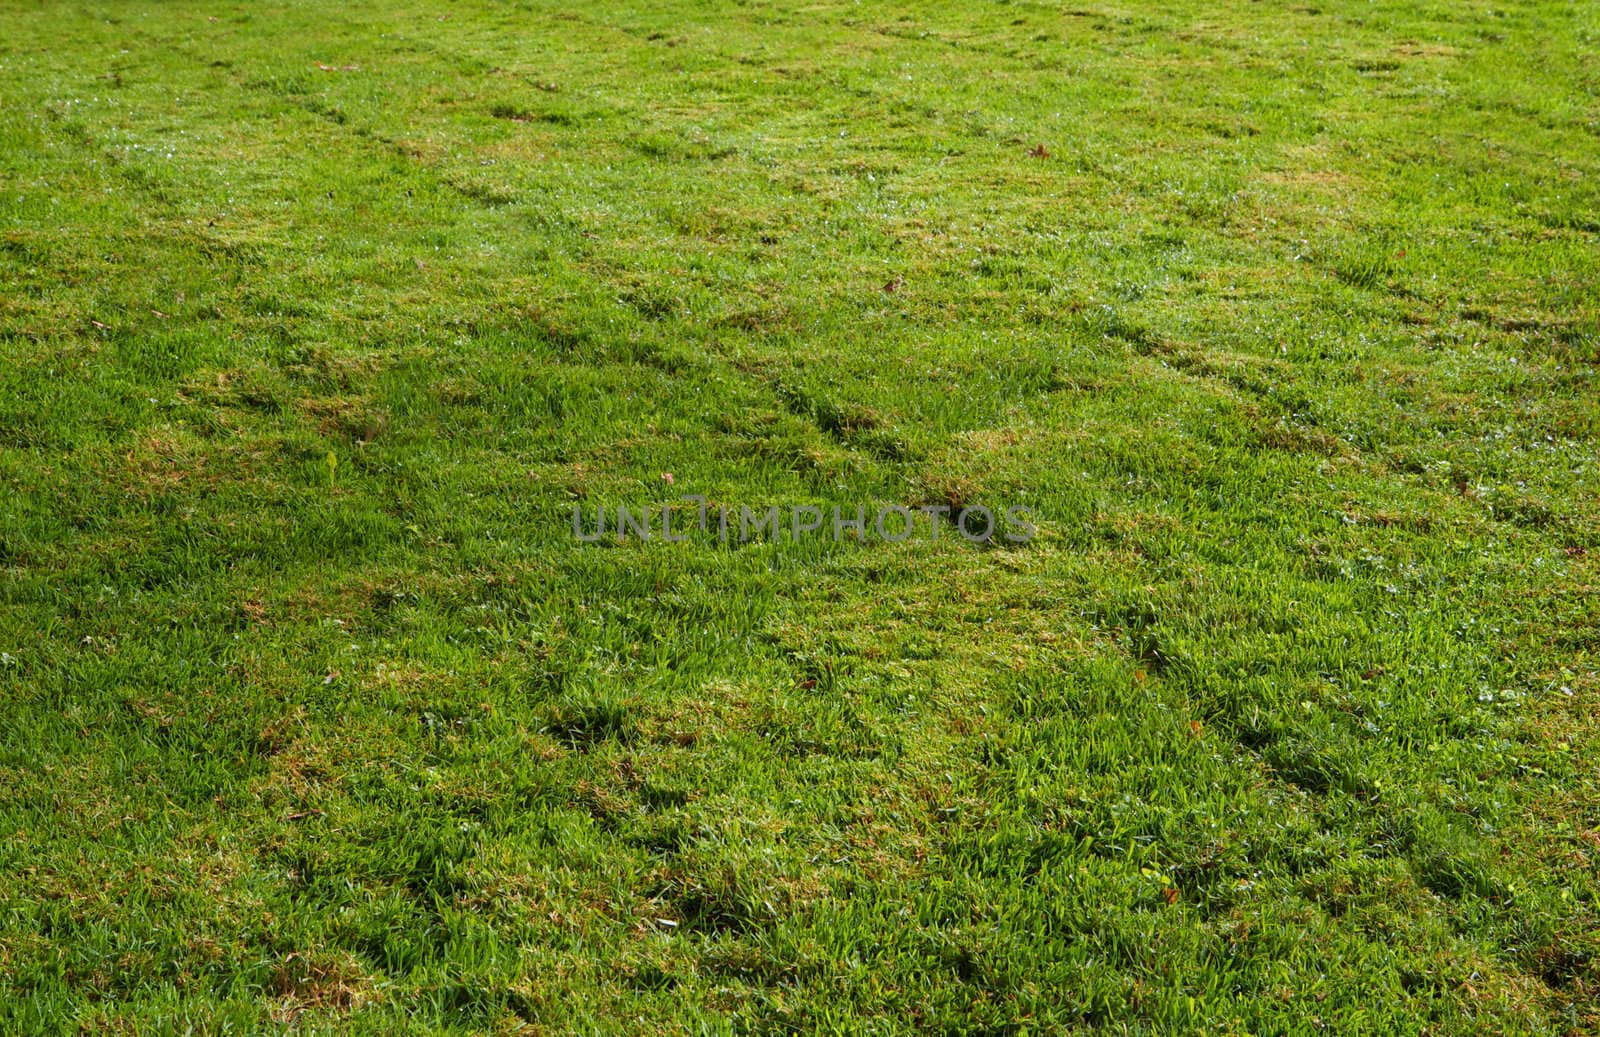 Freshly mowed green grass leaving a transverst pattern